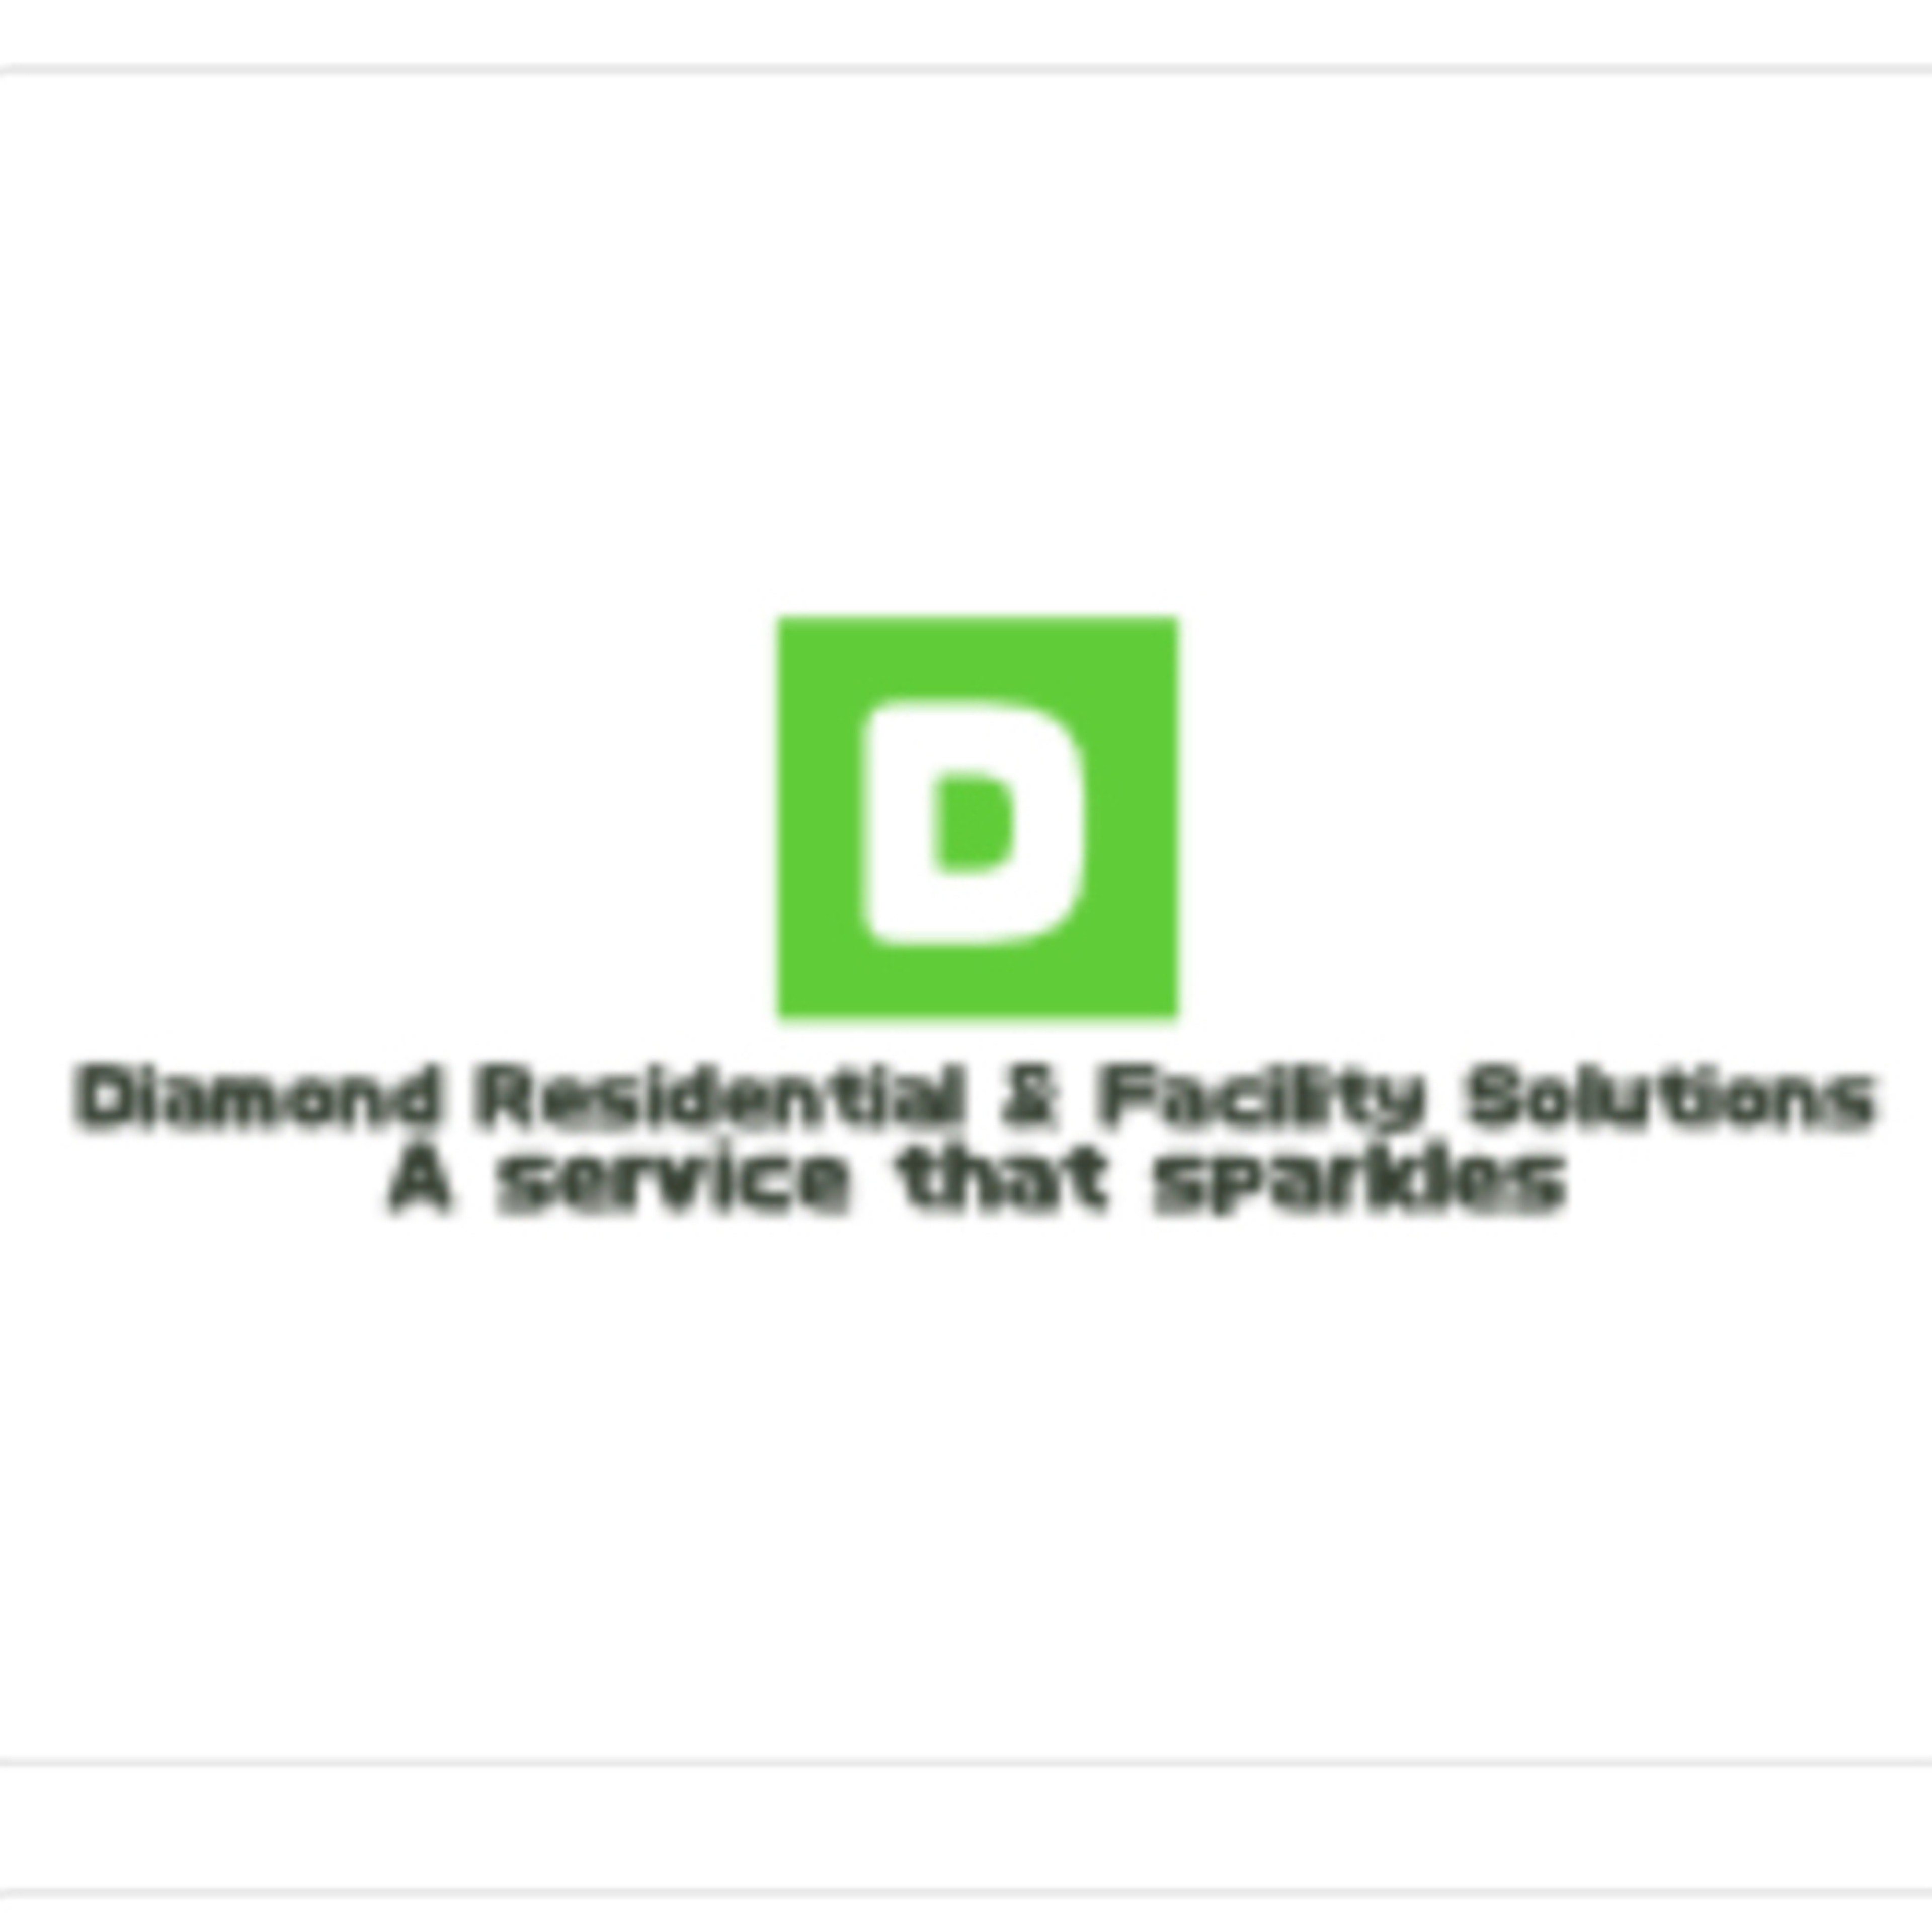 Diamond Residential & Facility Solutions LLC